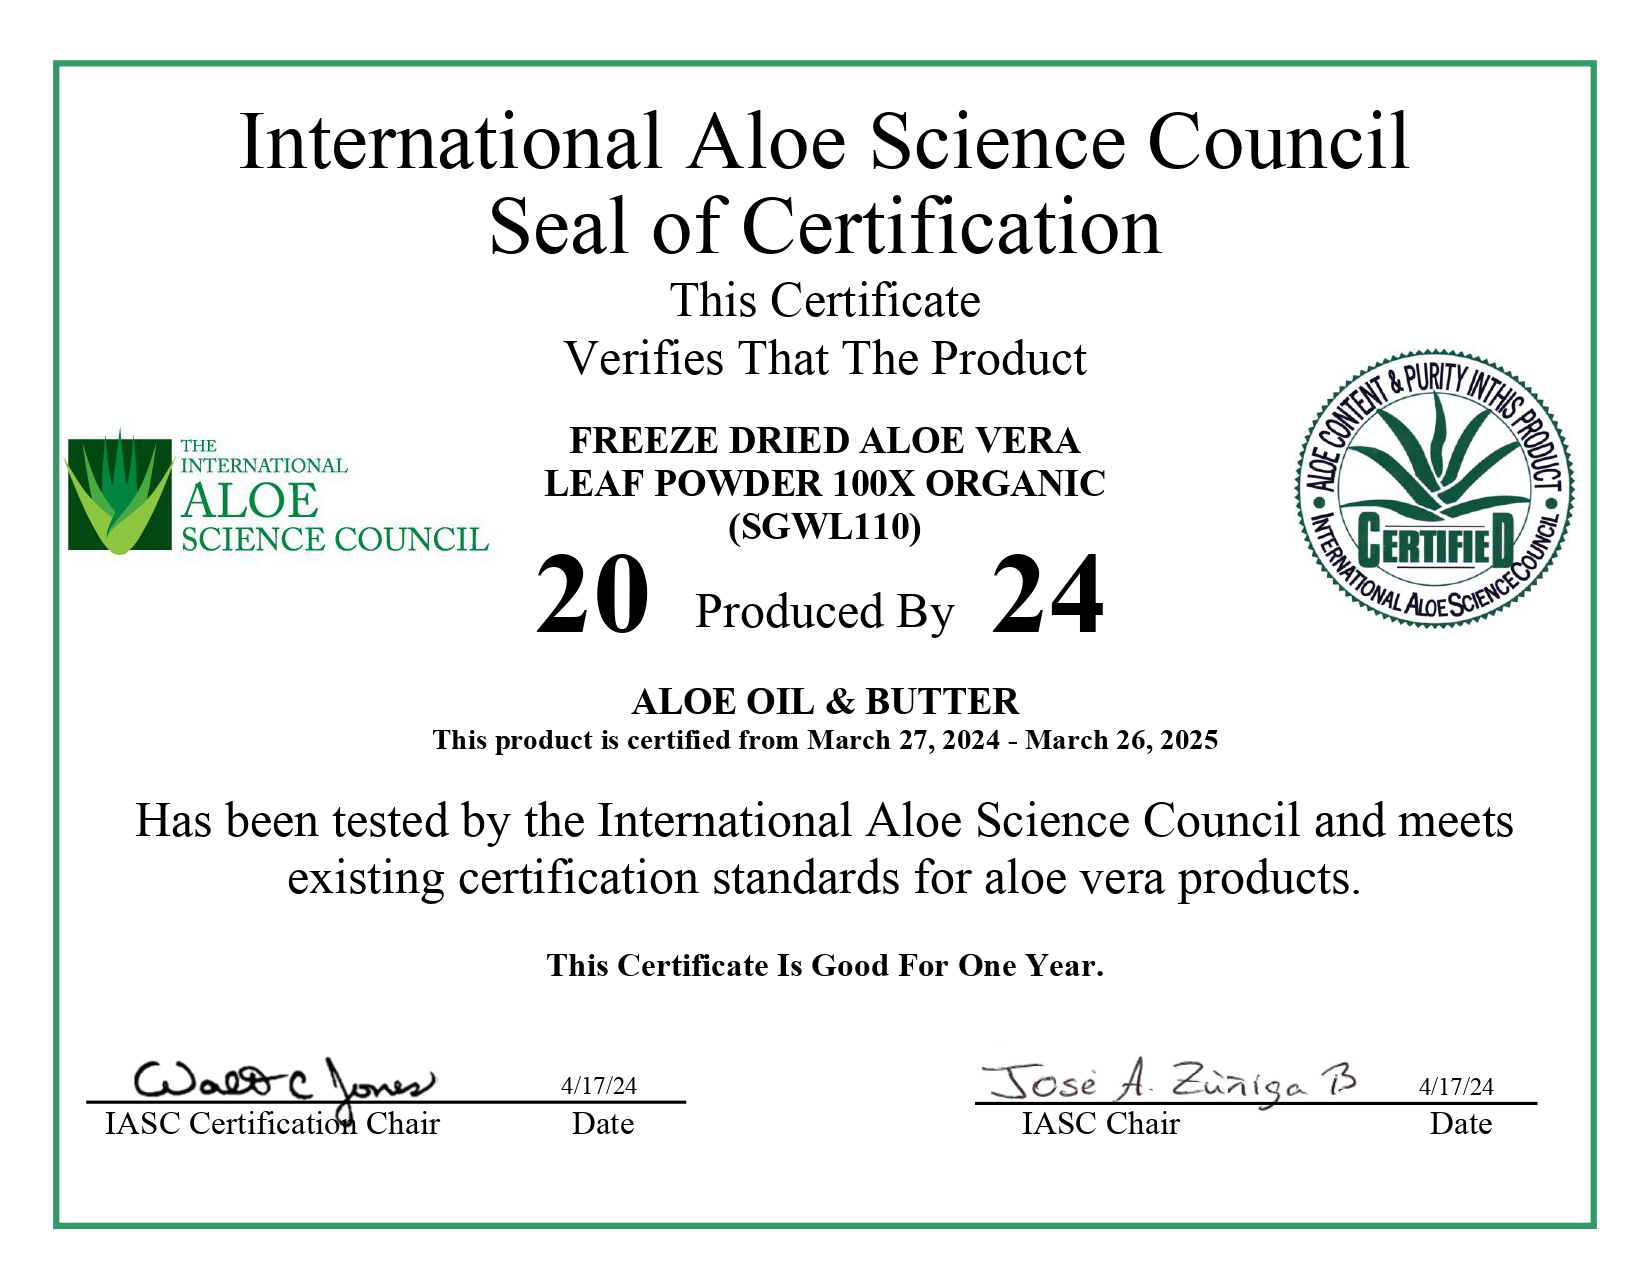 International Aloe Science Council Certification for Freeze Dried Aloe Vera Leaf Powder 100X